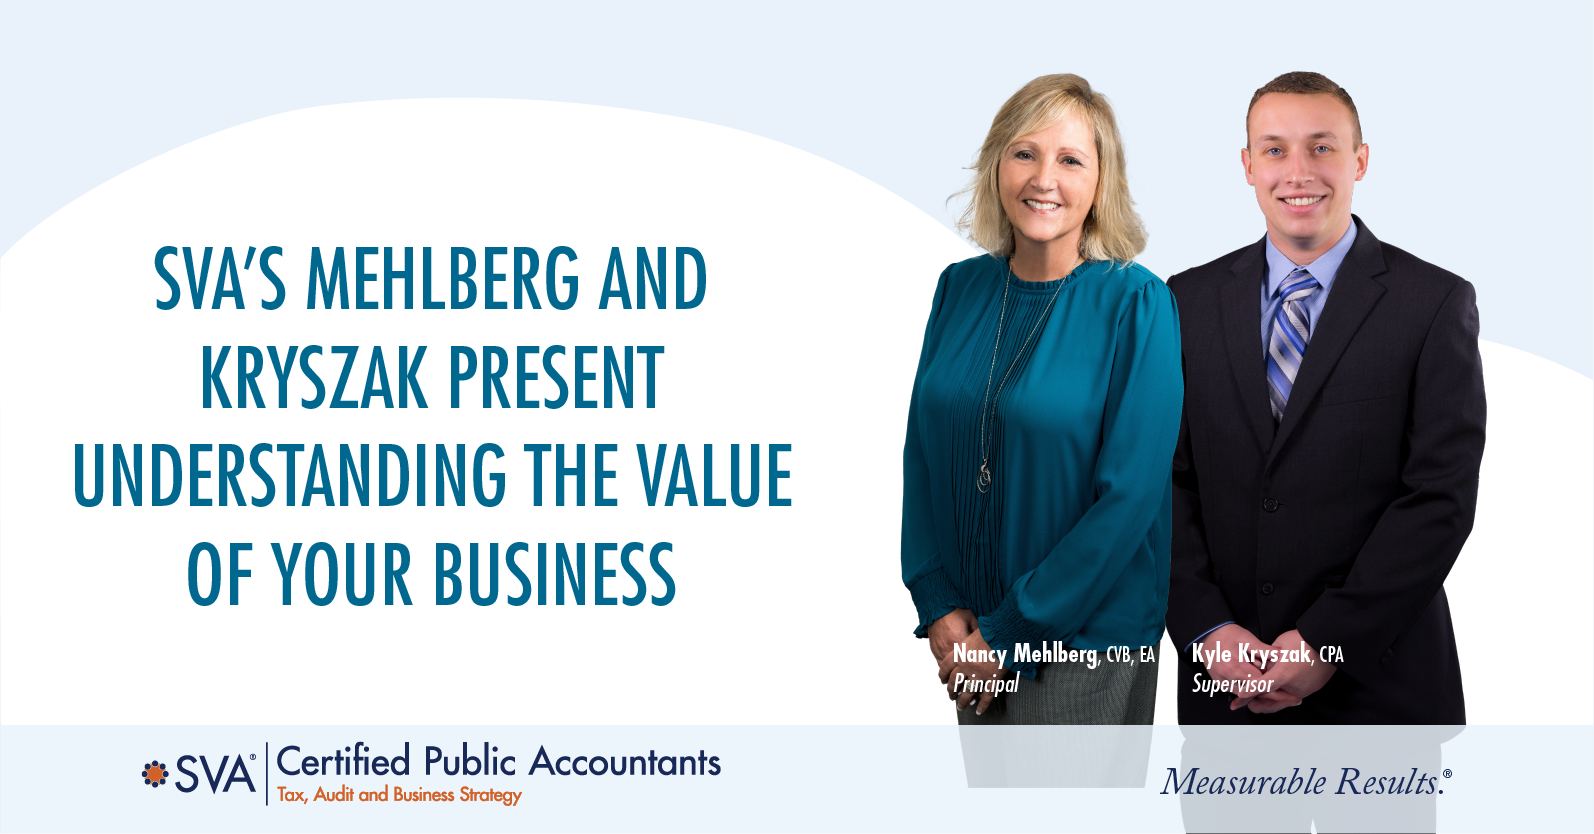 SVA’s Mehlberg and Kryszak Present Understanding the Value of Your Business  